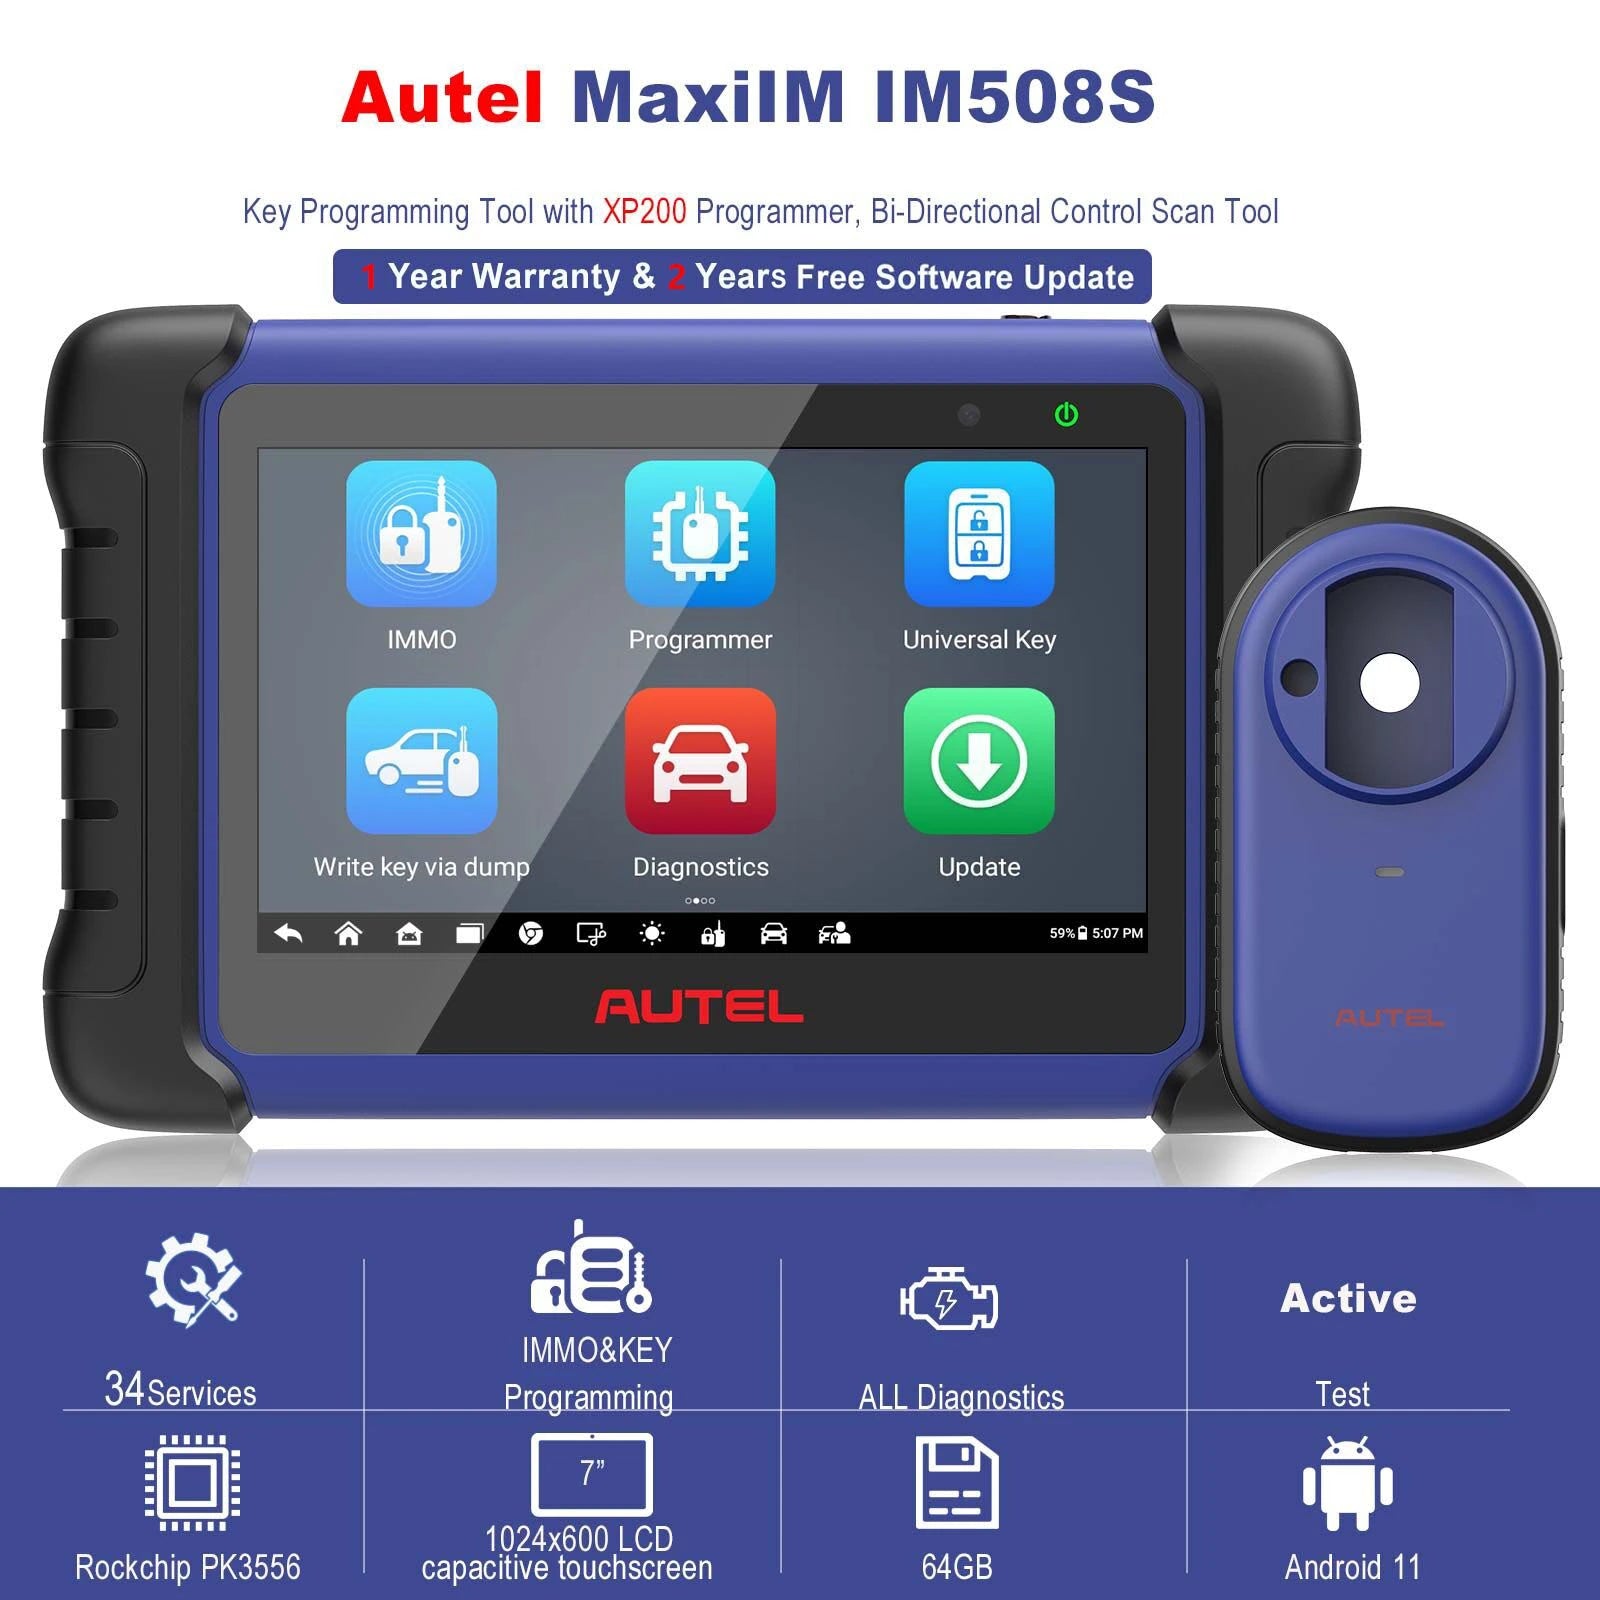 Autel MaxiIM IM508S Key Programming Tool with XP200 Programmer